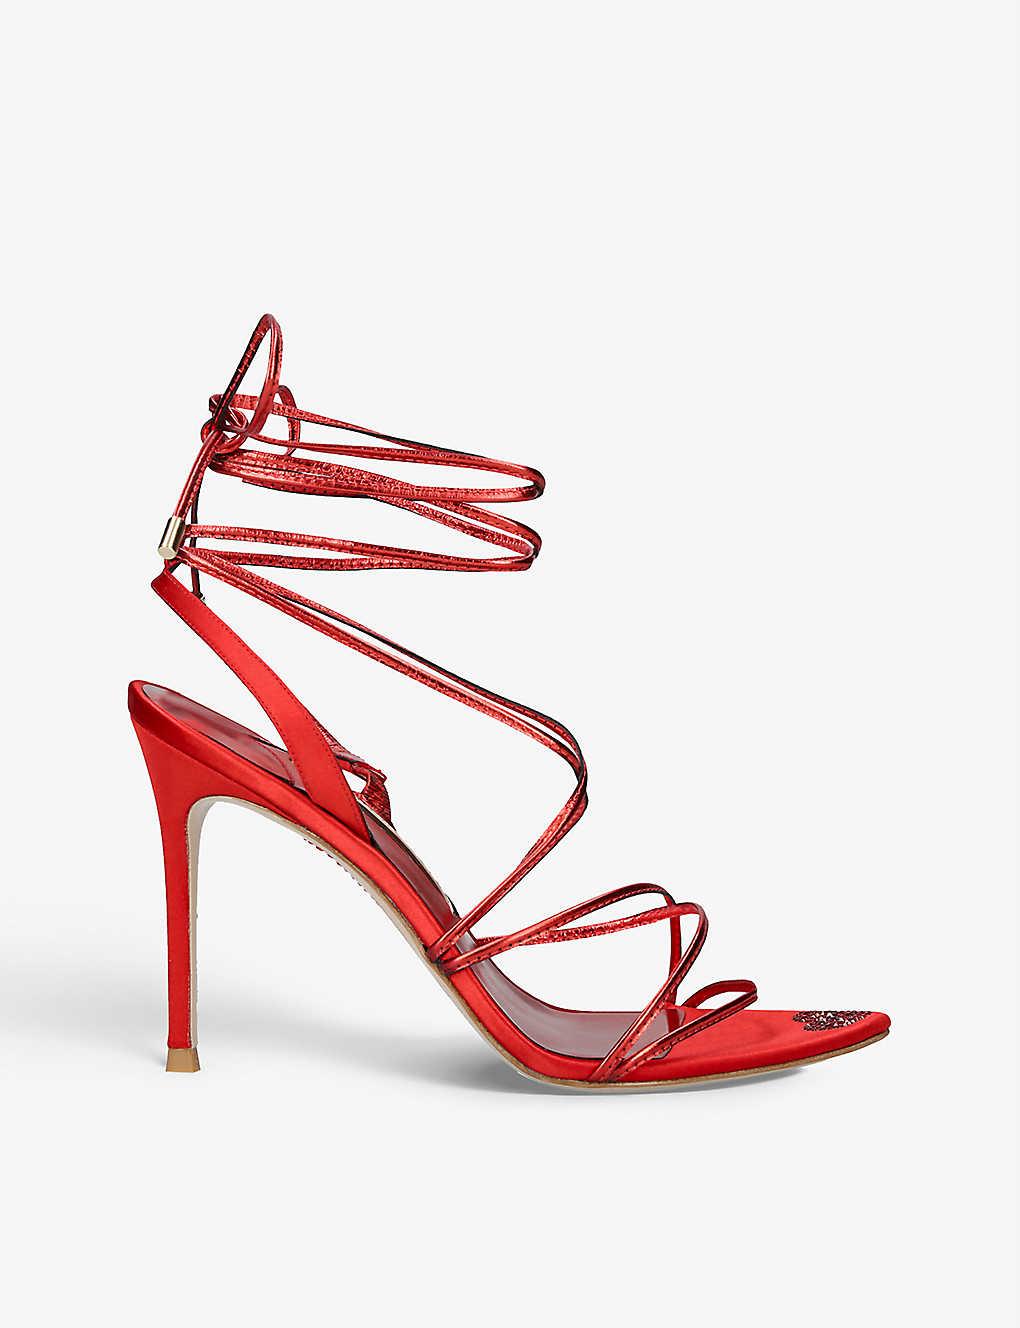 Sophia Webster Amora Heeled Leather Sandals in Red | Lyst